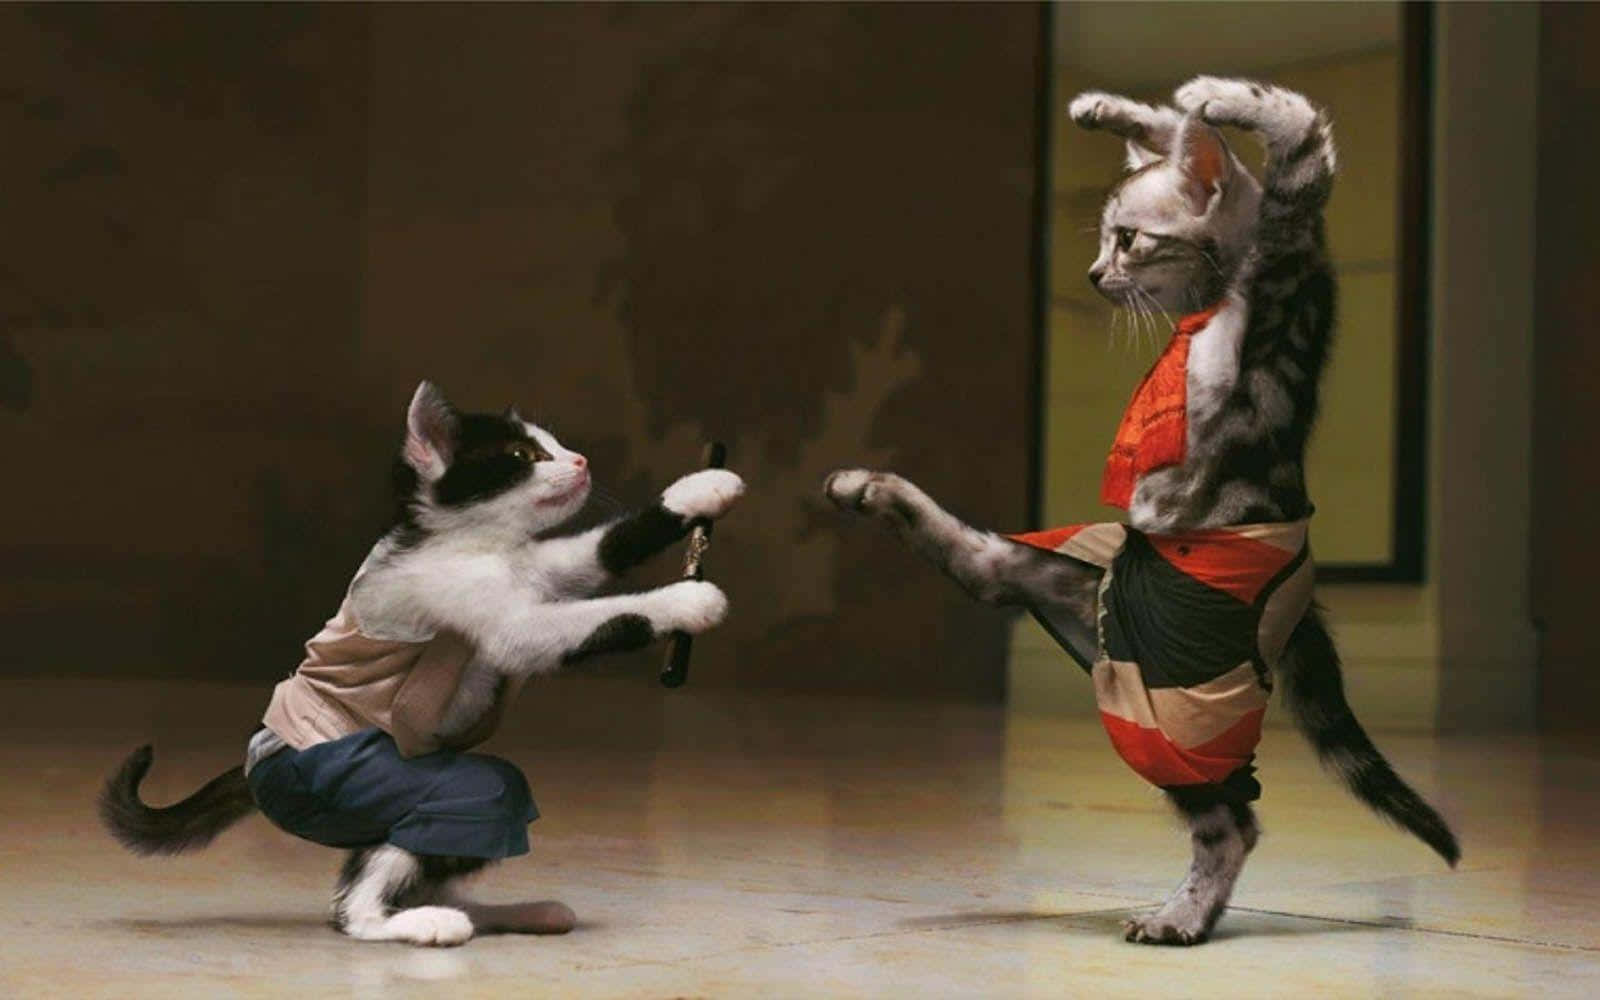 Seltsameskatzenbild Beim Süßen Karatekampf.